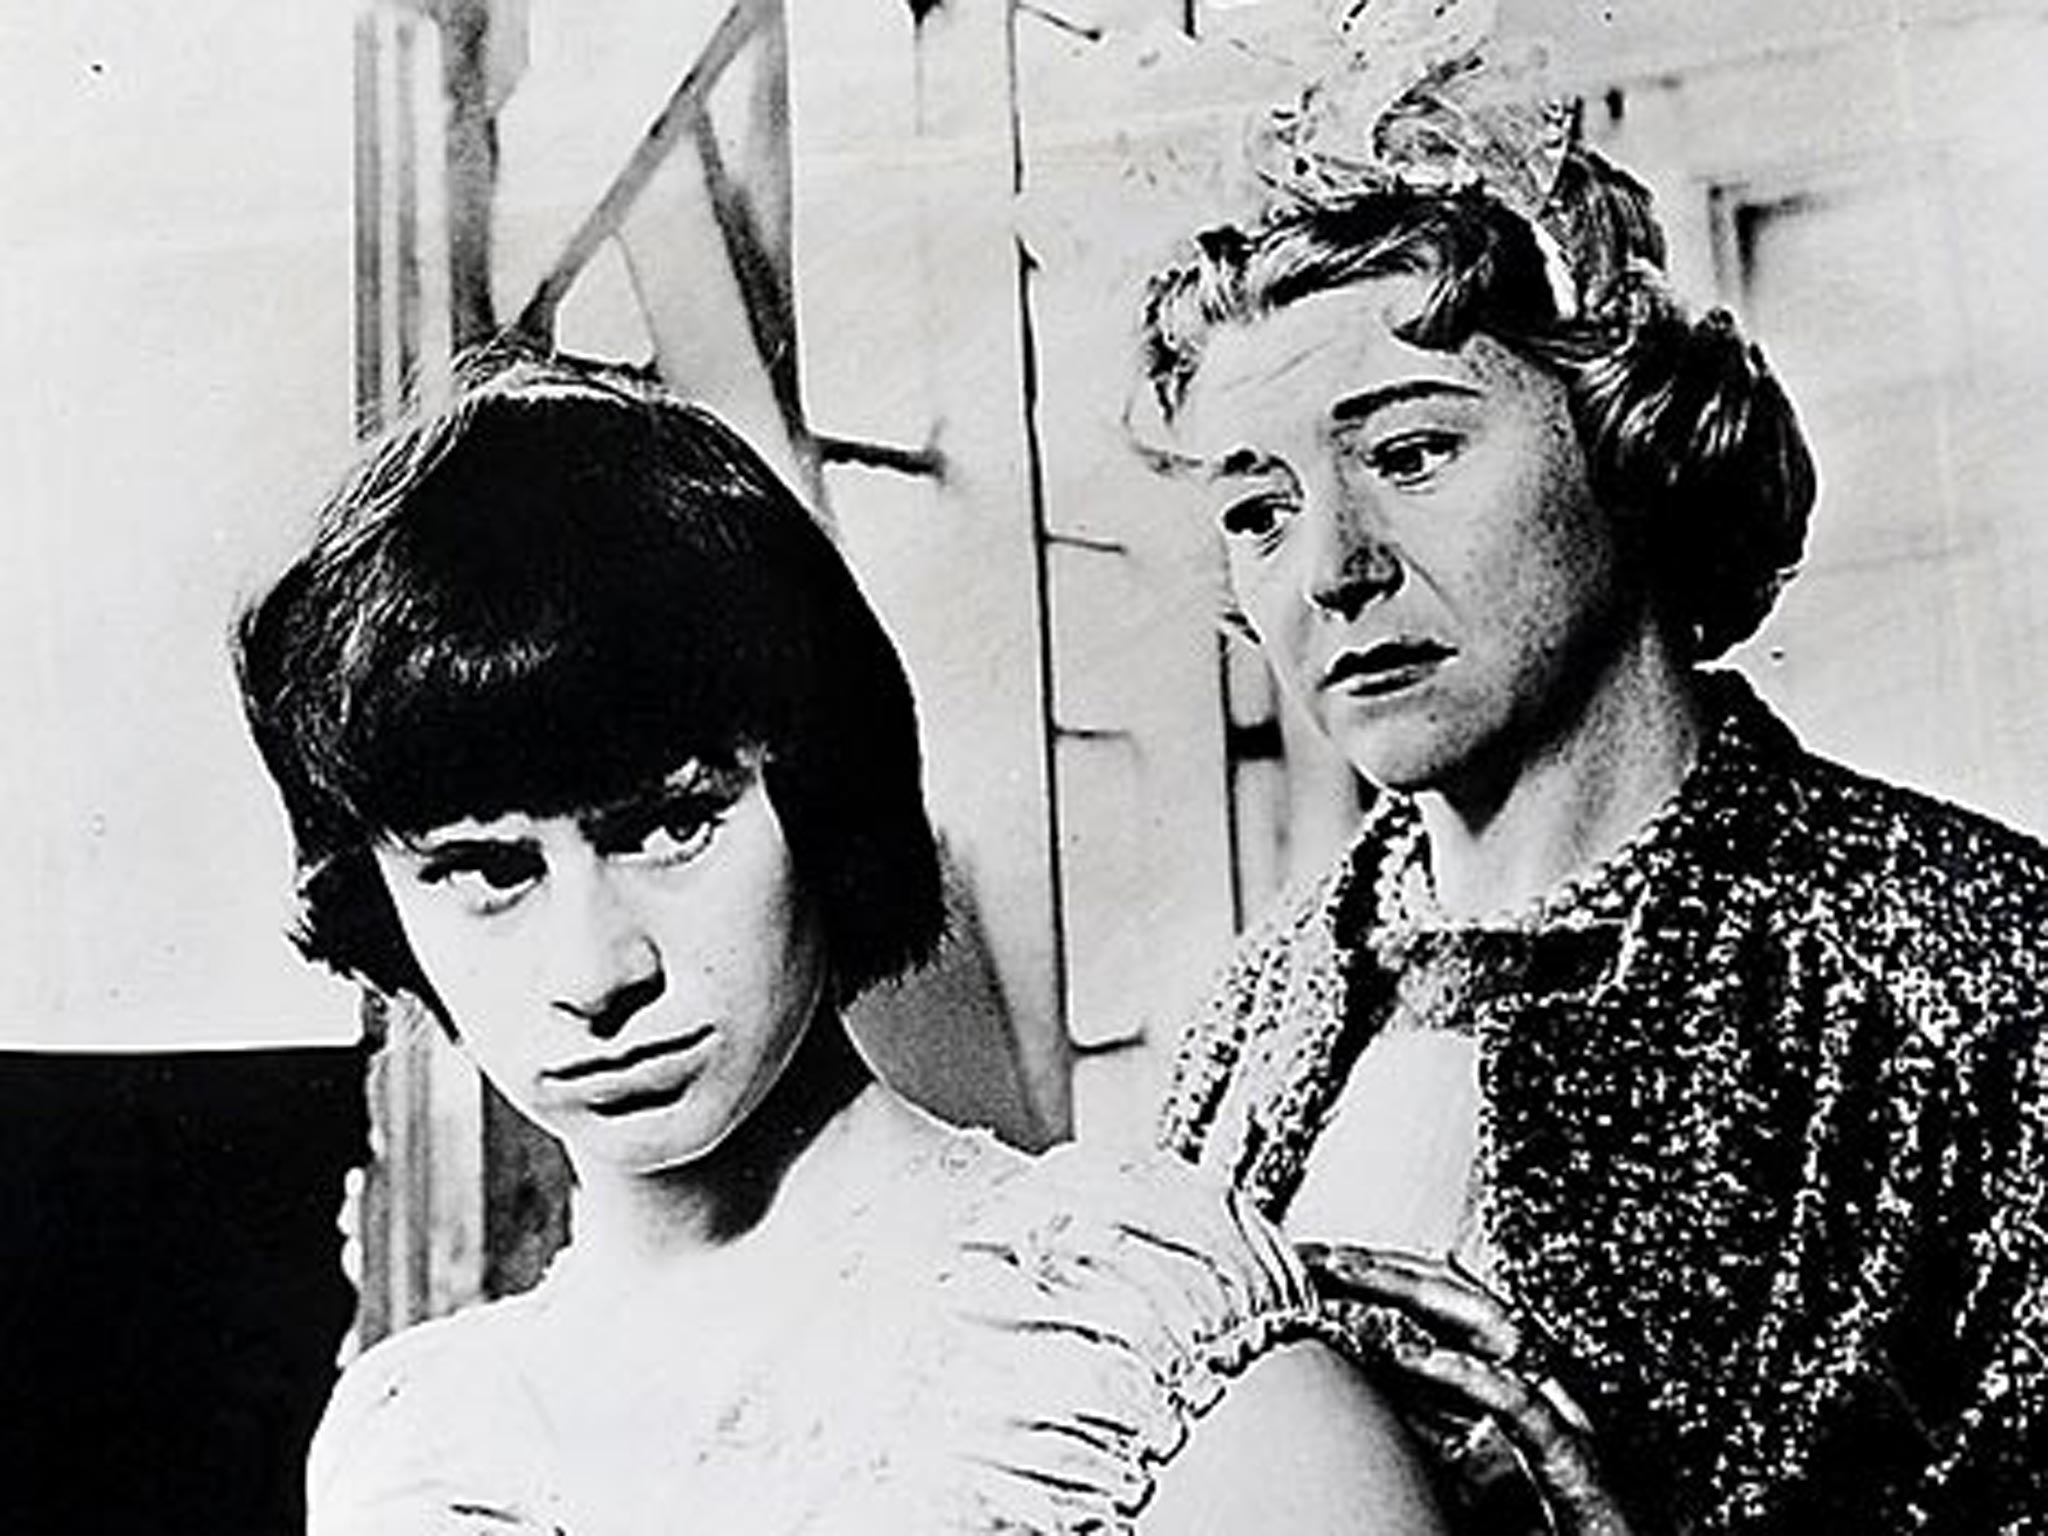 Dora Bryan in 1961 with Rita Tushingham in 'A Taste of Honey'